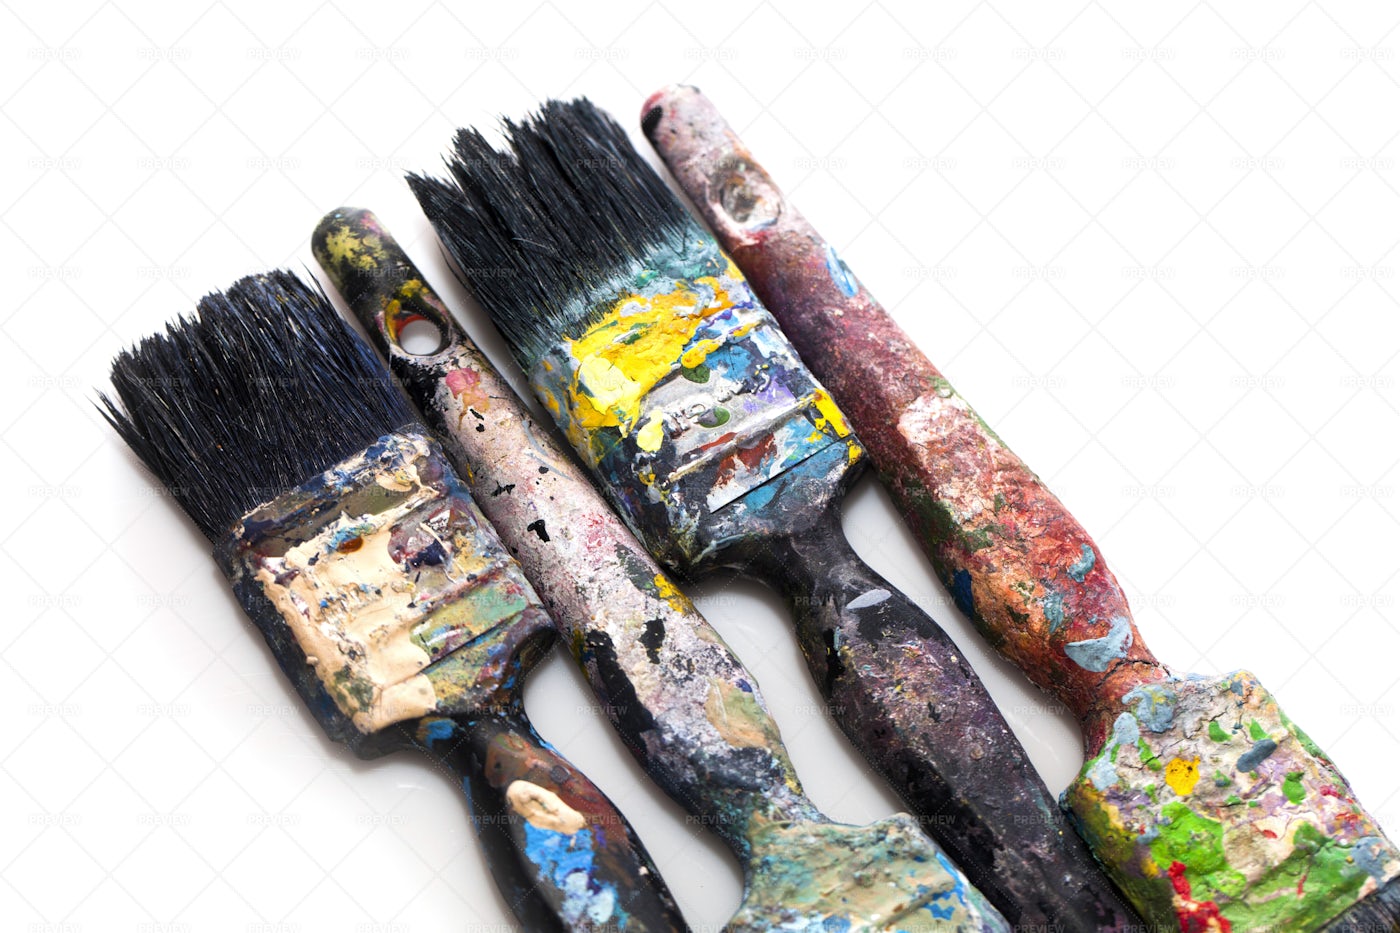 Used Paint Brushes: Stock Photos